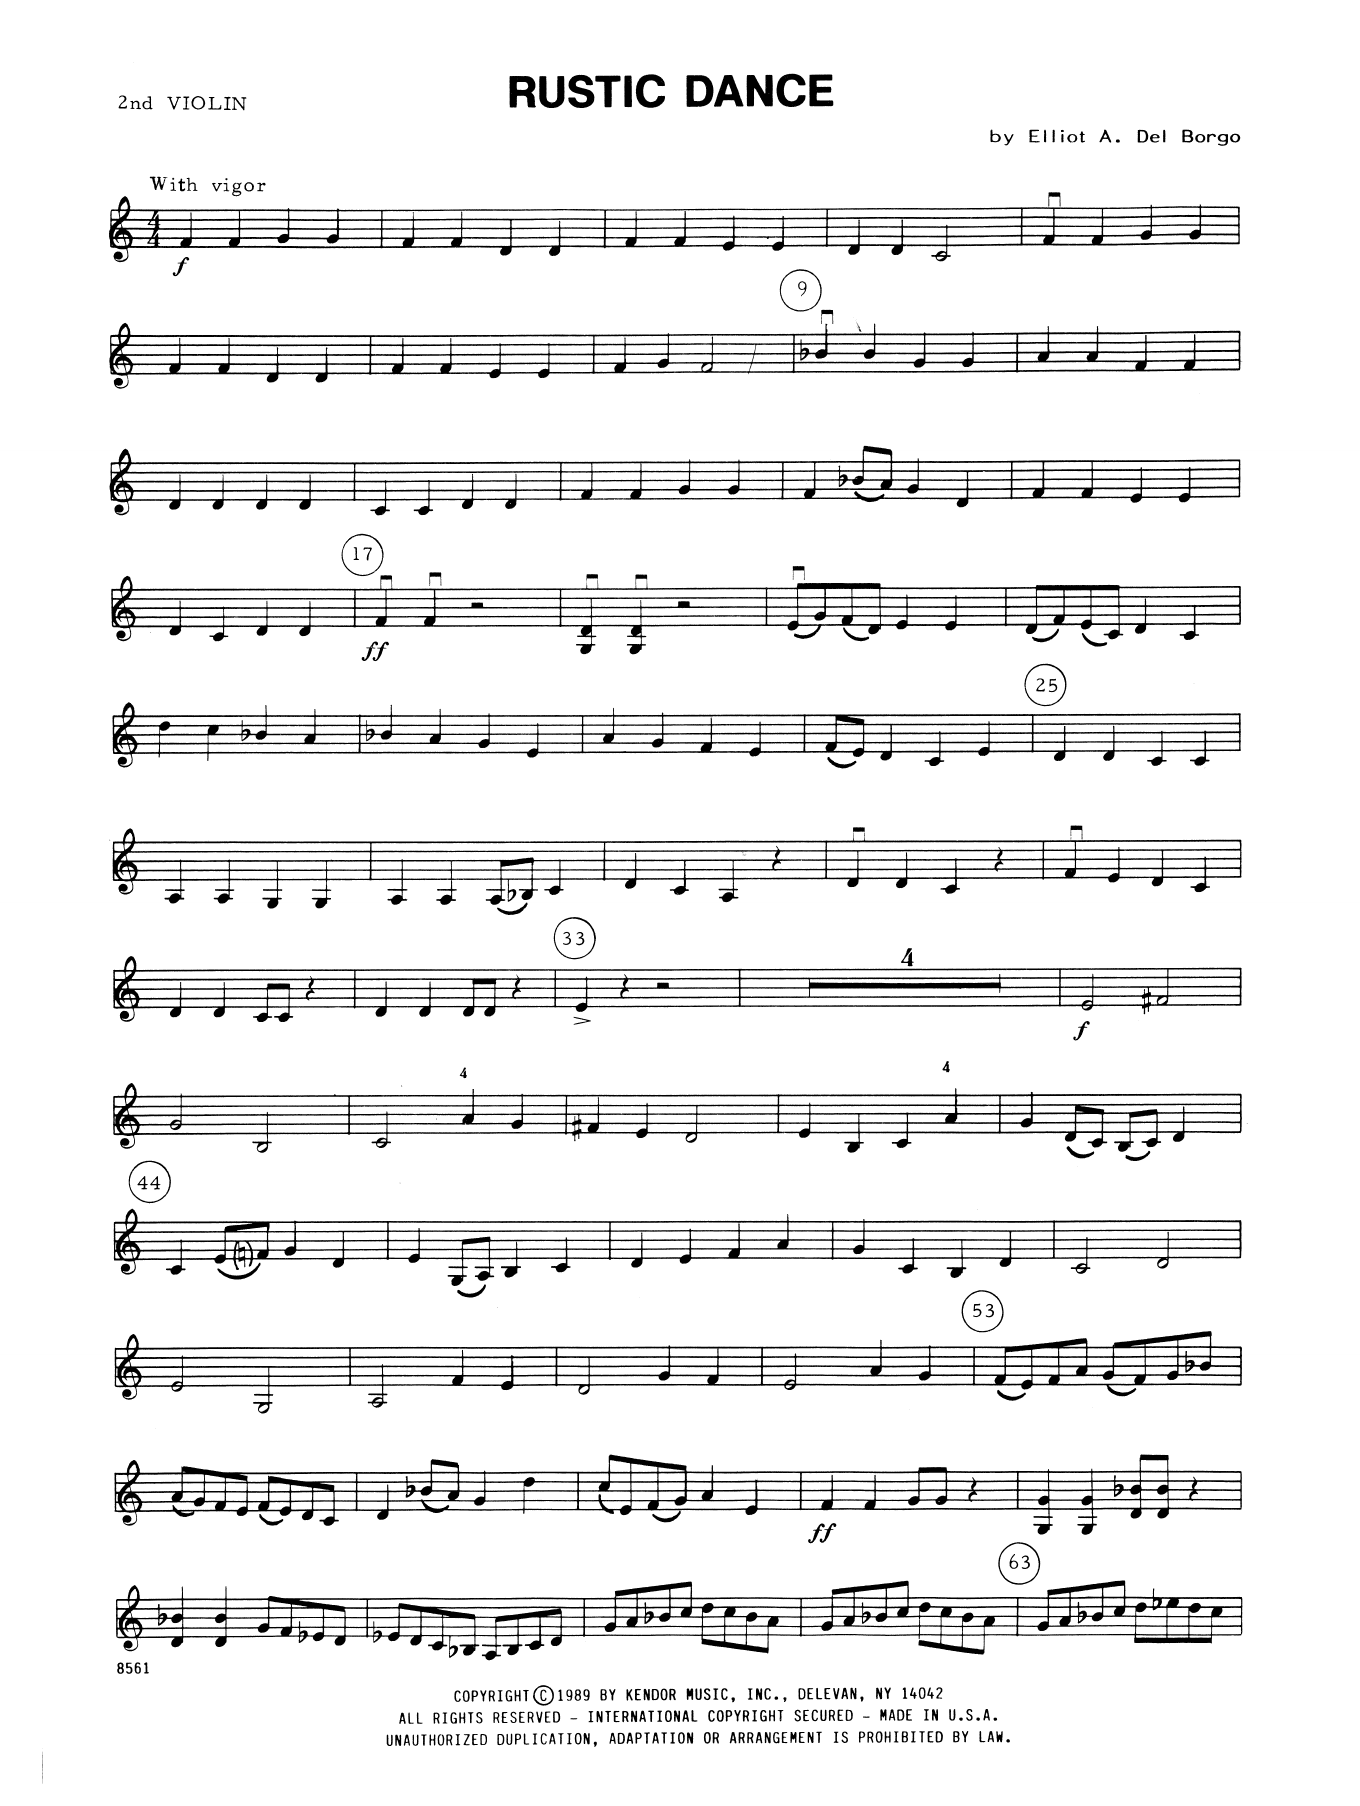 Download Elliot A. Del Borgo Rustic Dance - 2nd Violin Sheet Music